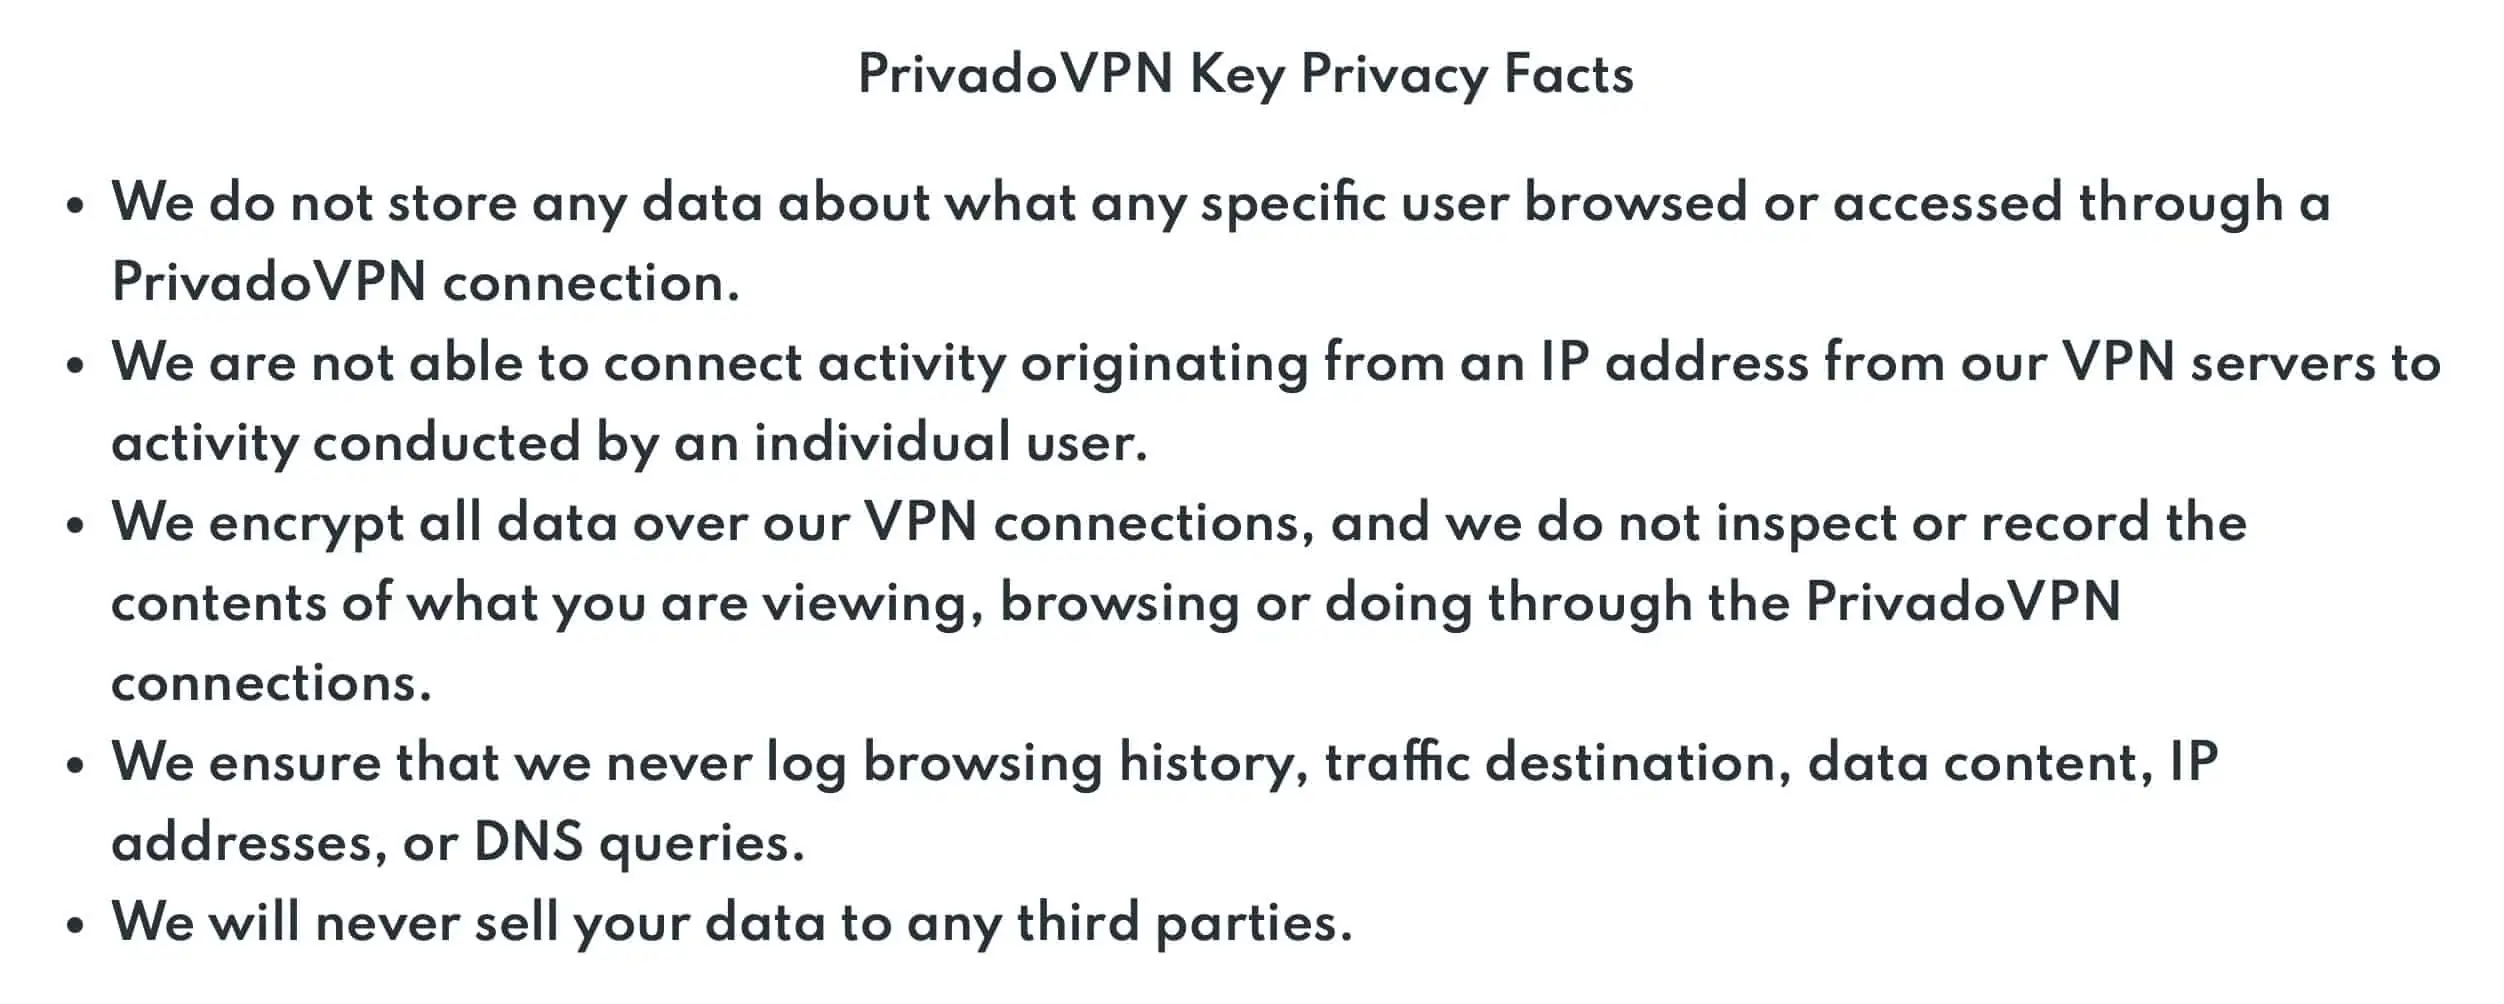 PrivadoVPN - Privacy Policy 1